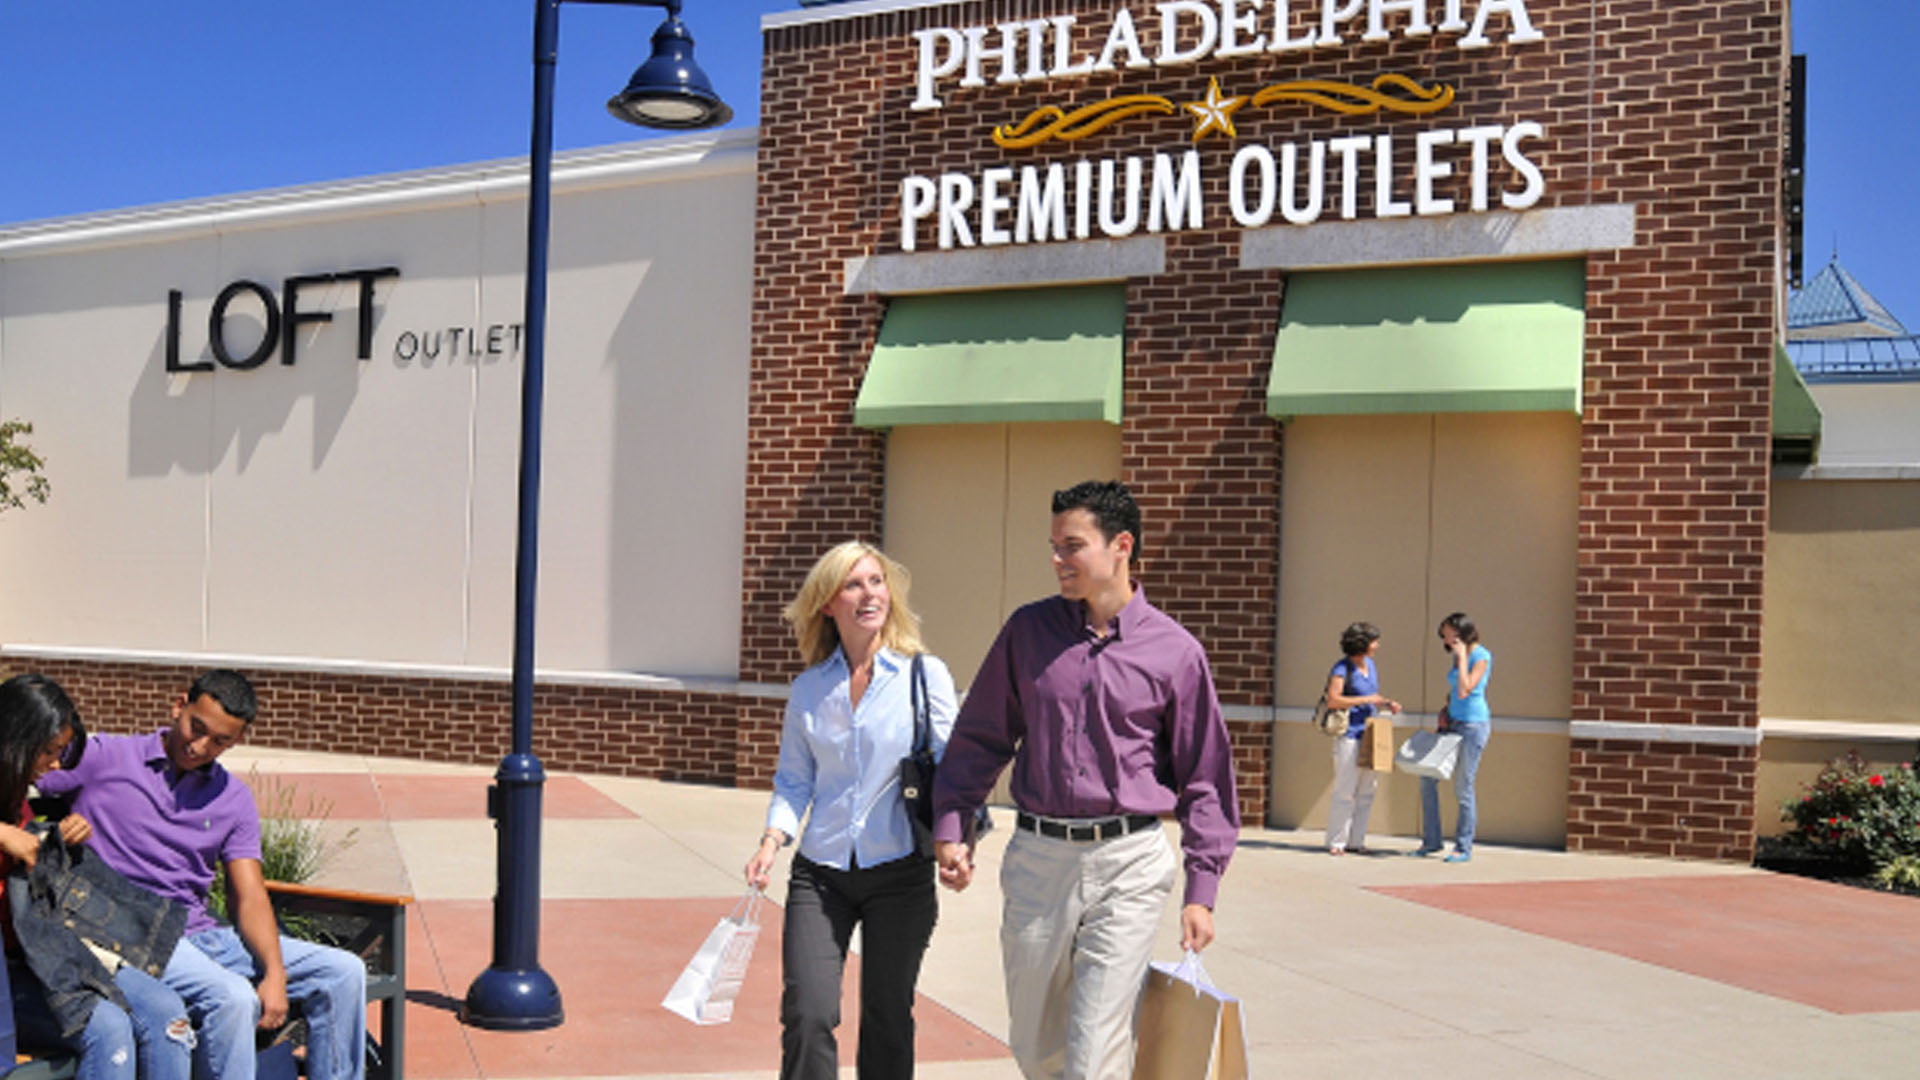 Philadelphia premium outlets